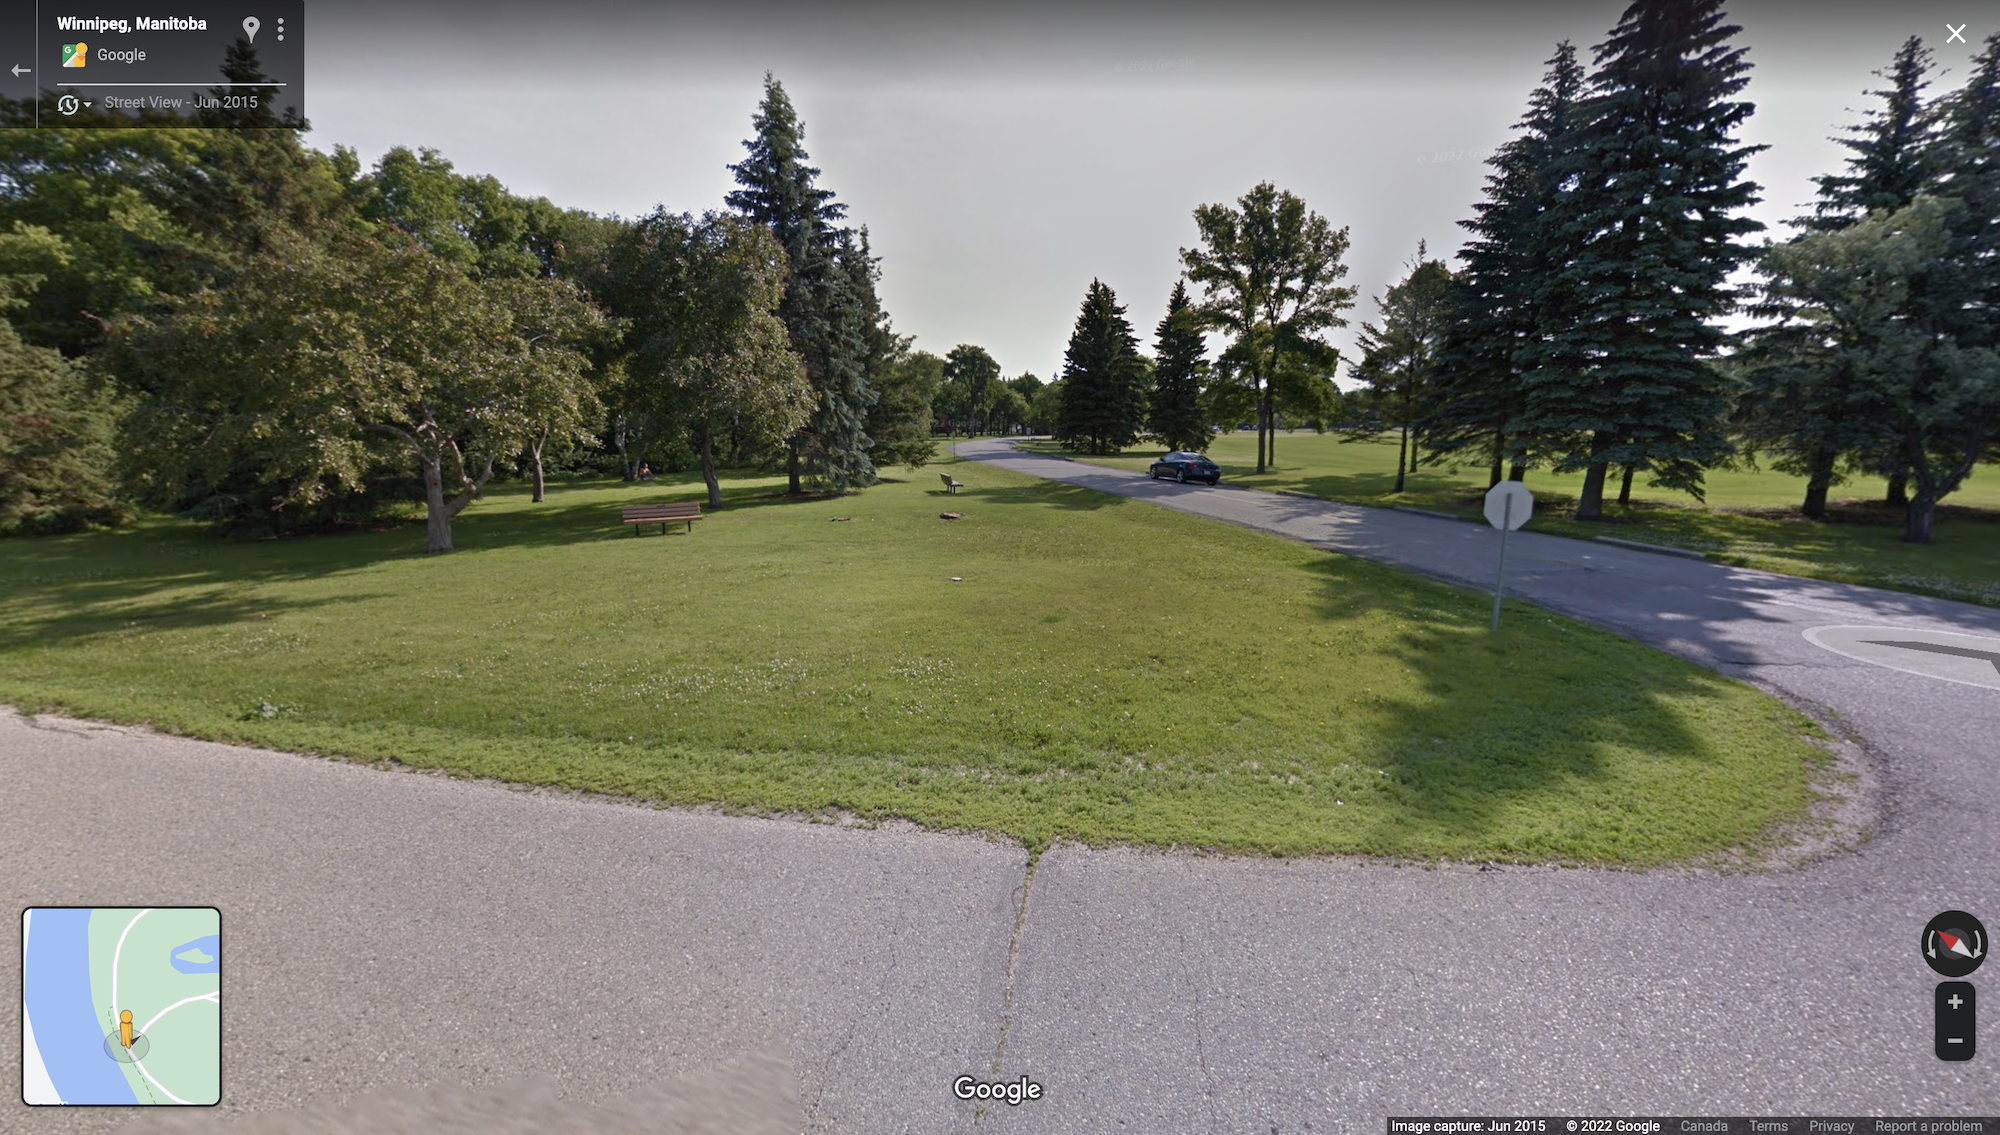 Google street view of St. Vital Park in Winnipeg, Manitoba